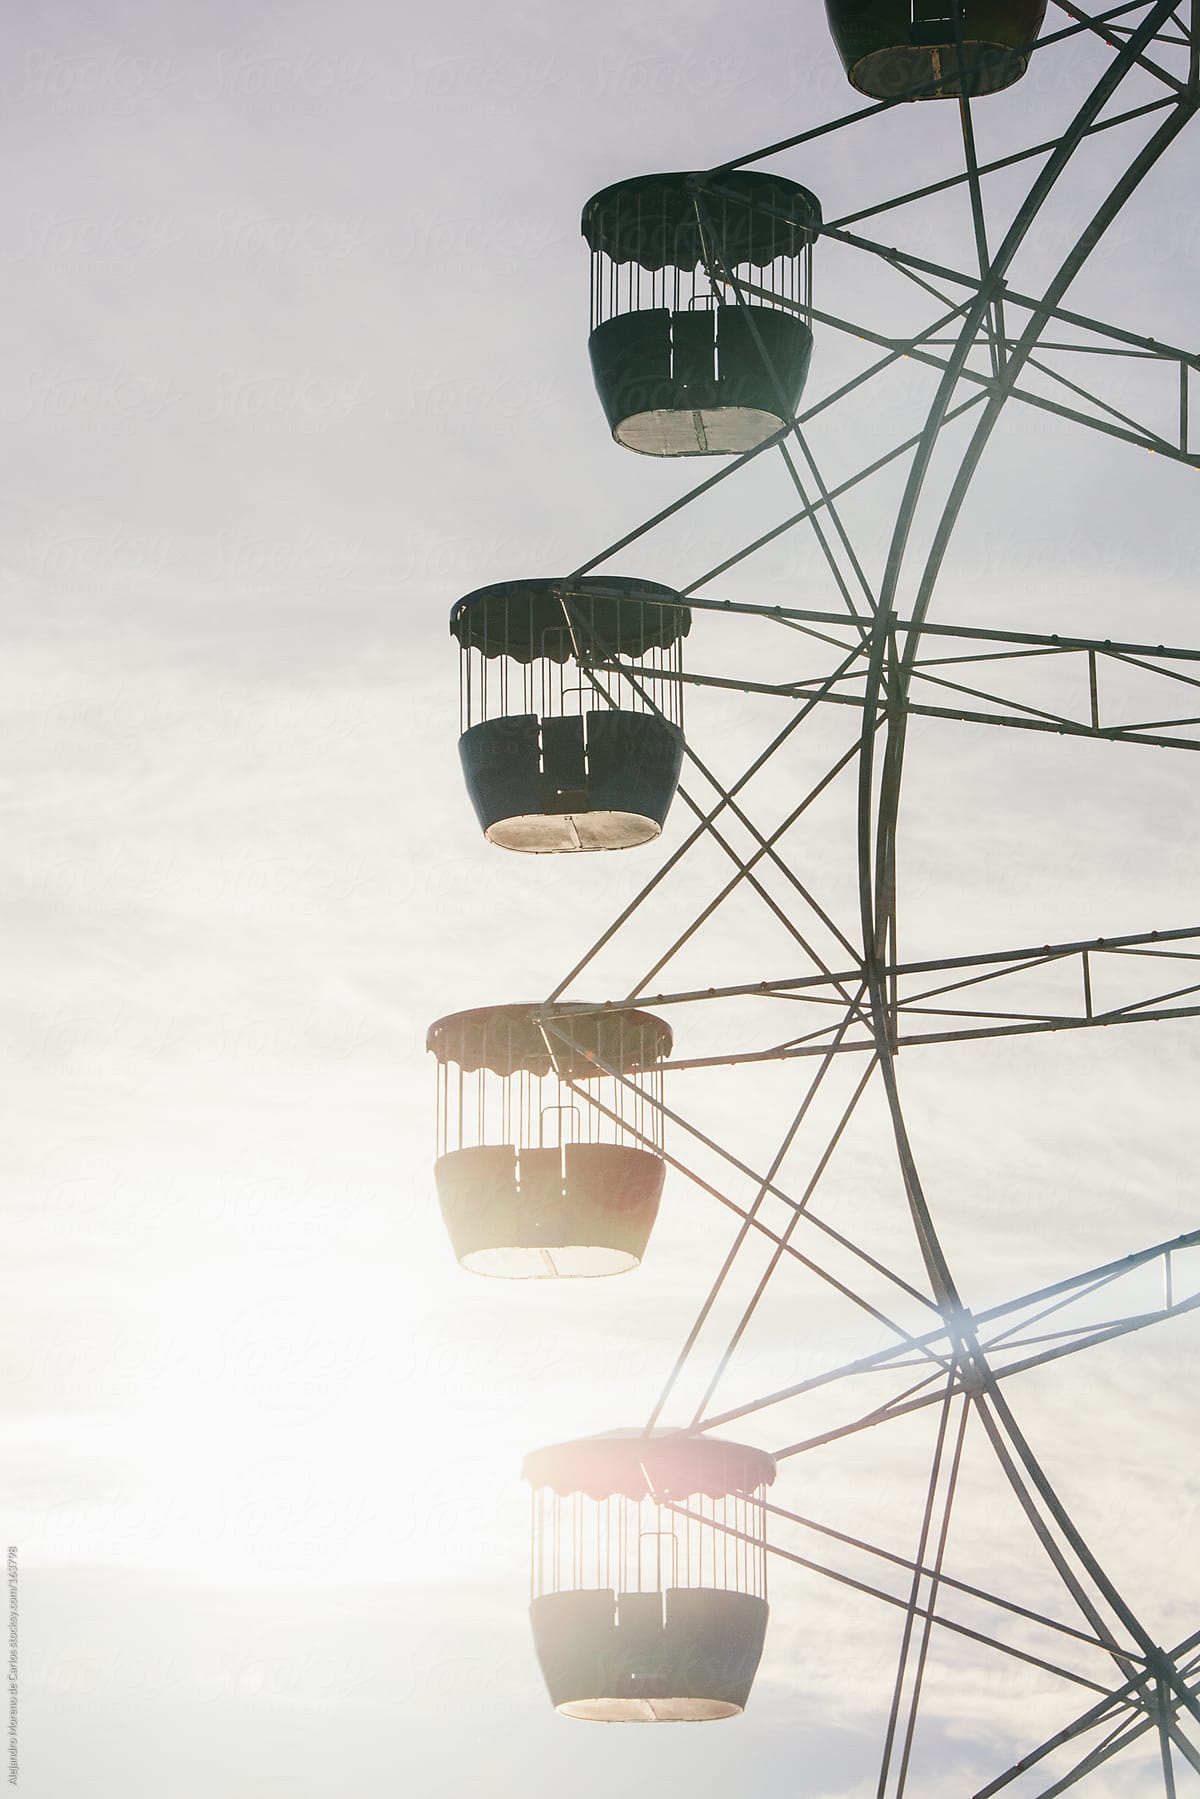 Ferris wheel at sunset in Sydney, Australia